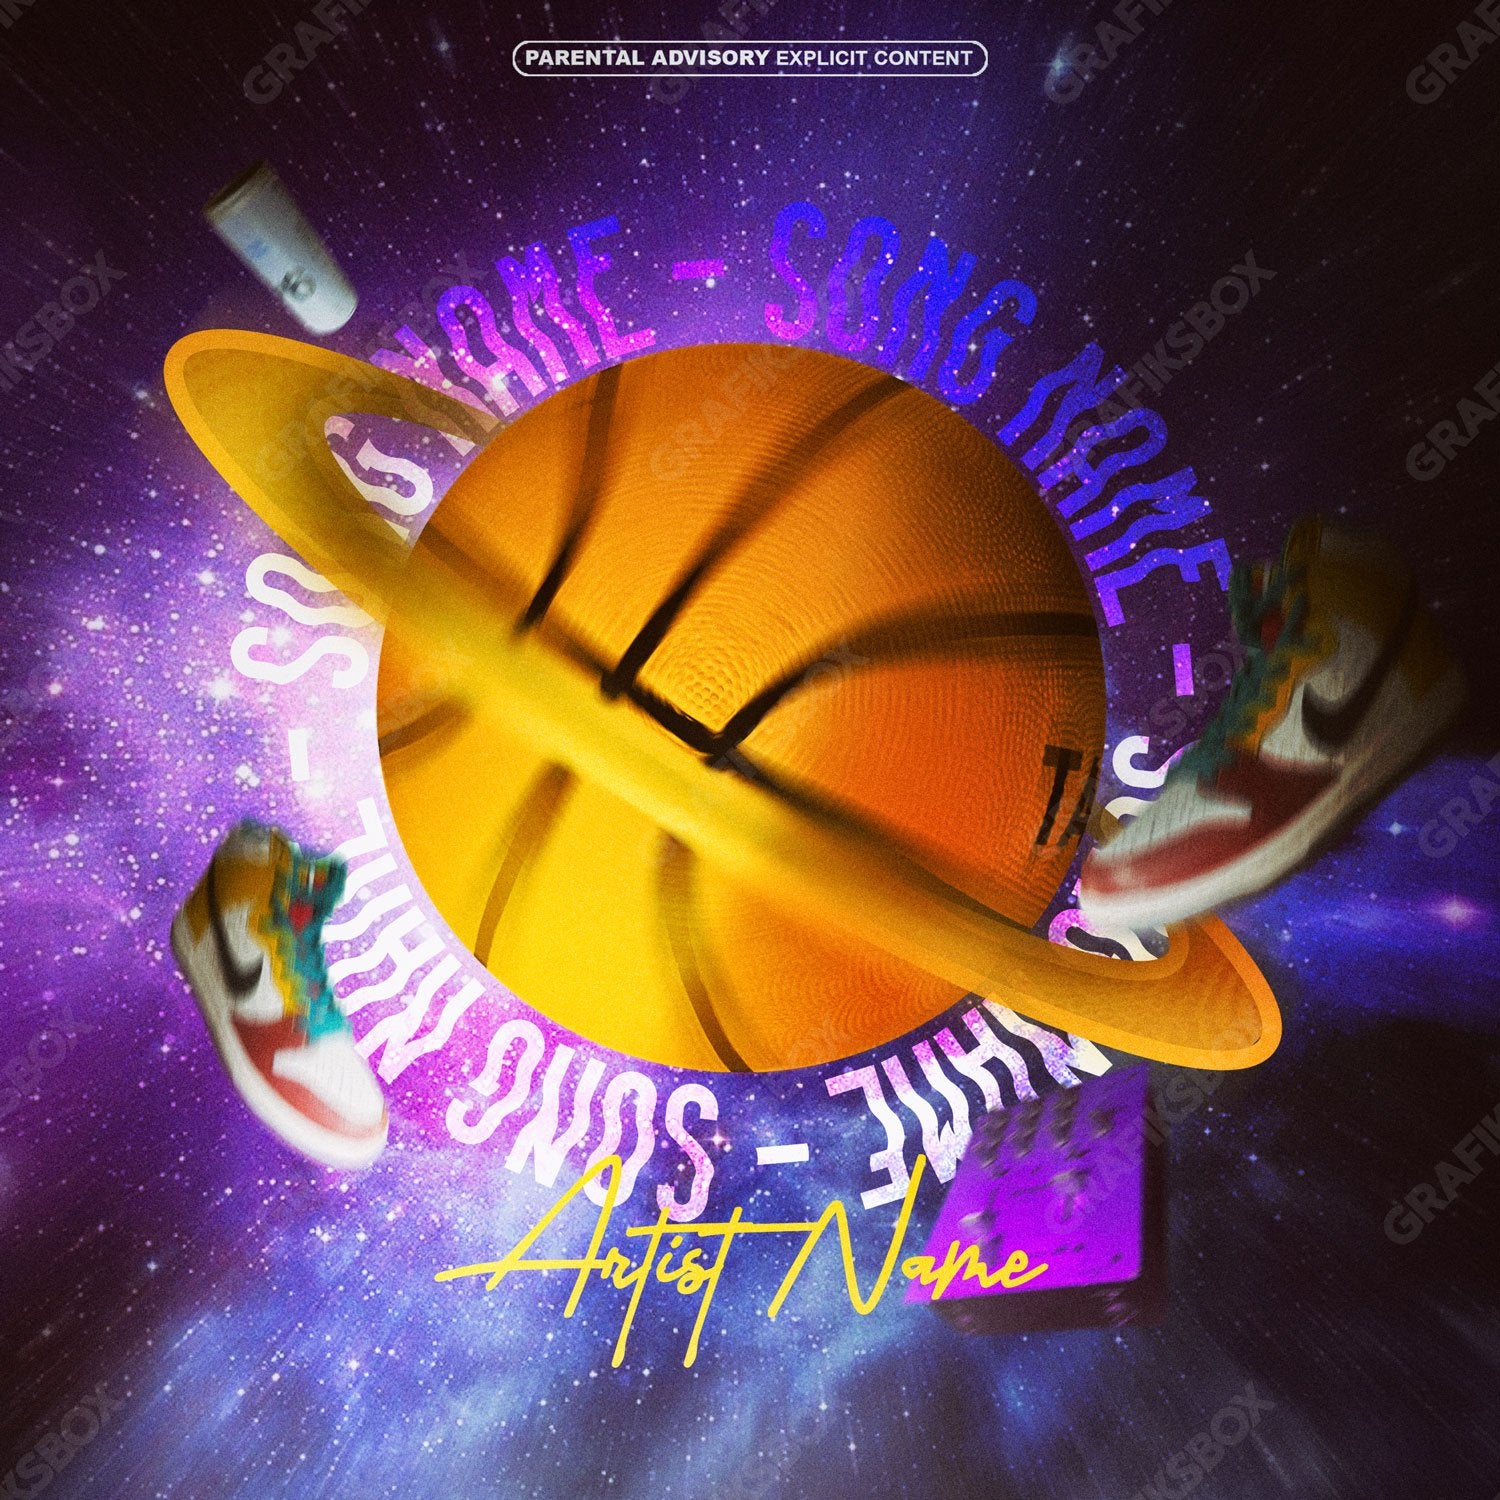 Space Ball premade cover art